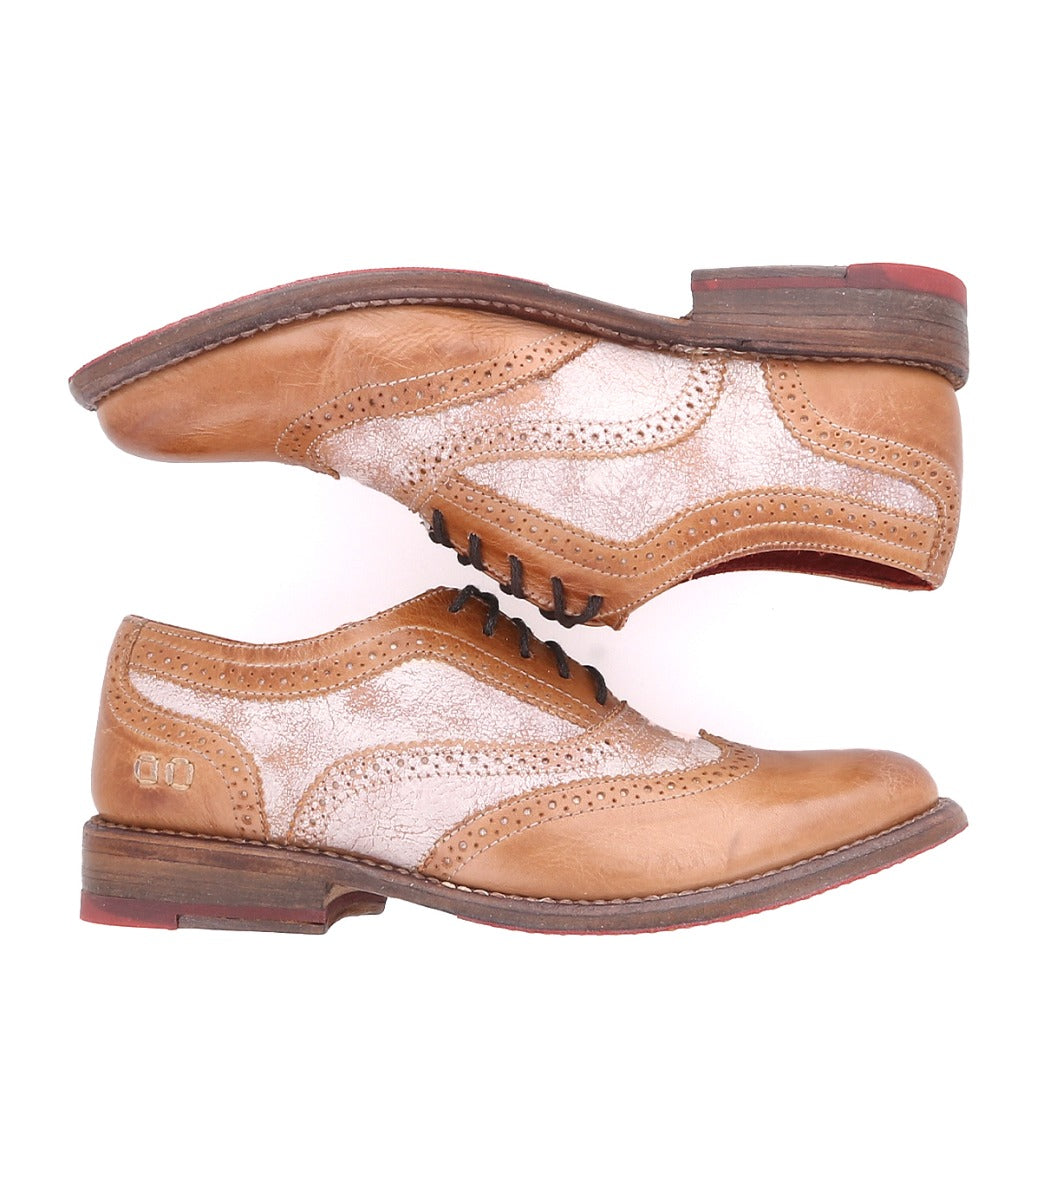 A pair of Bed Stu Lita tan wingtip oxford shoes.